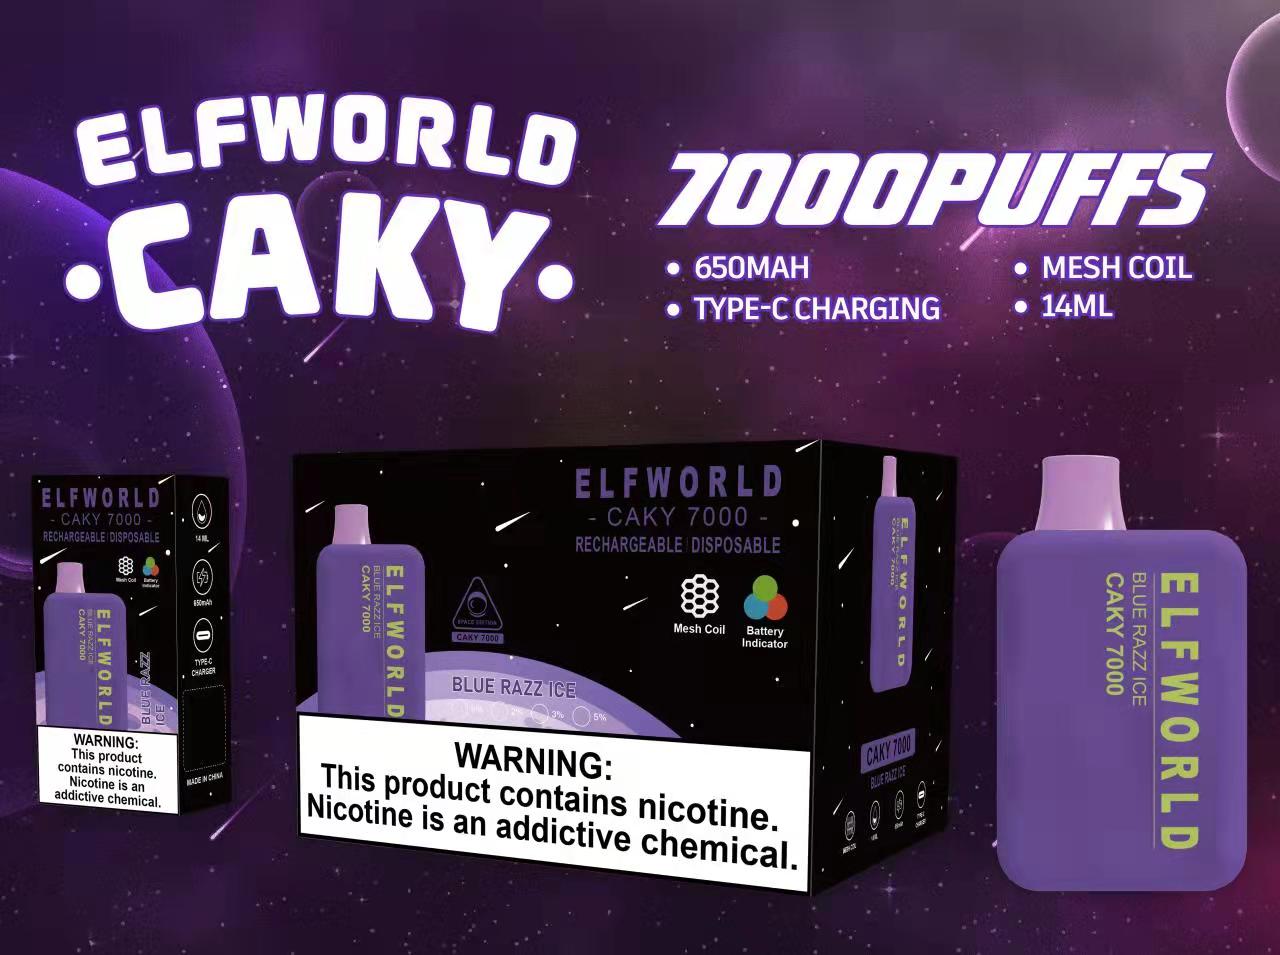 ElfWorld Caky 7000 -Puffs